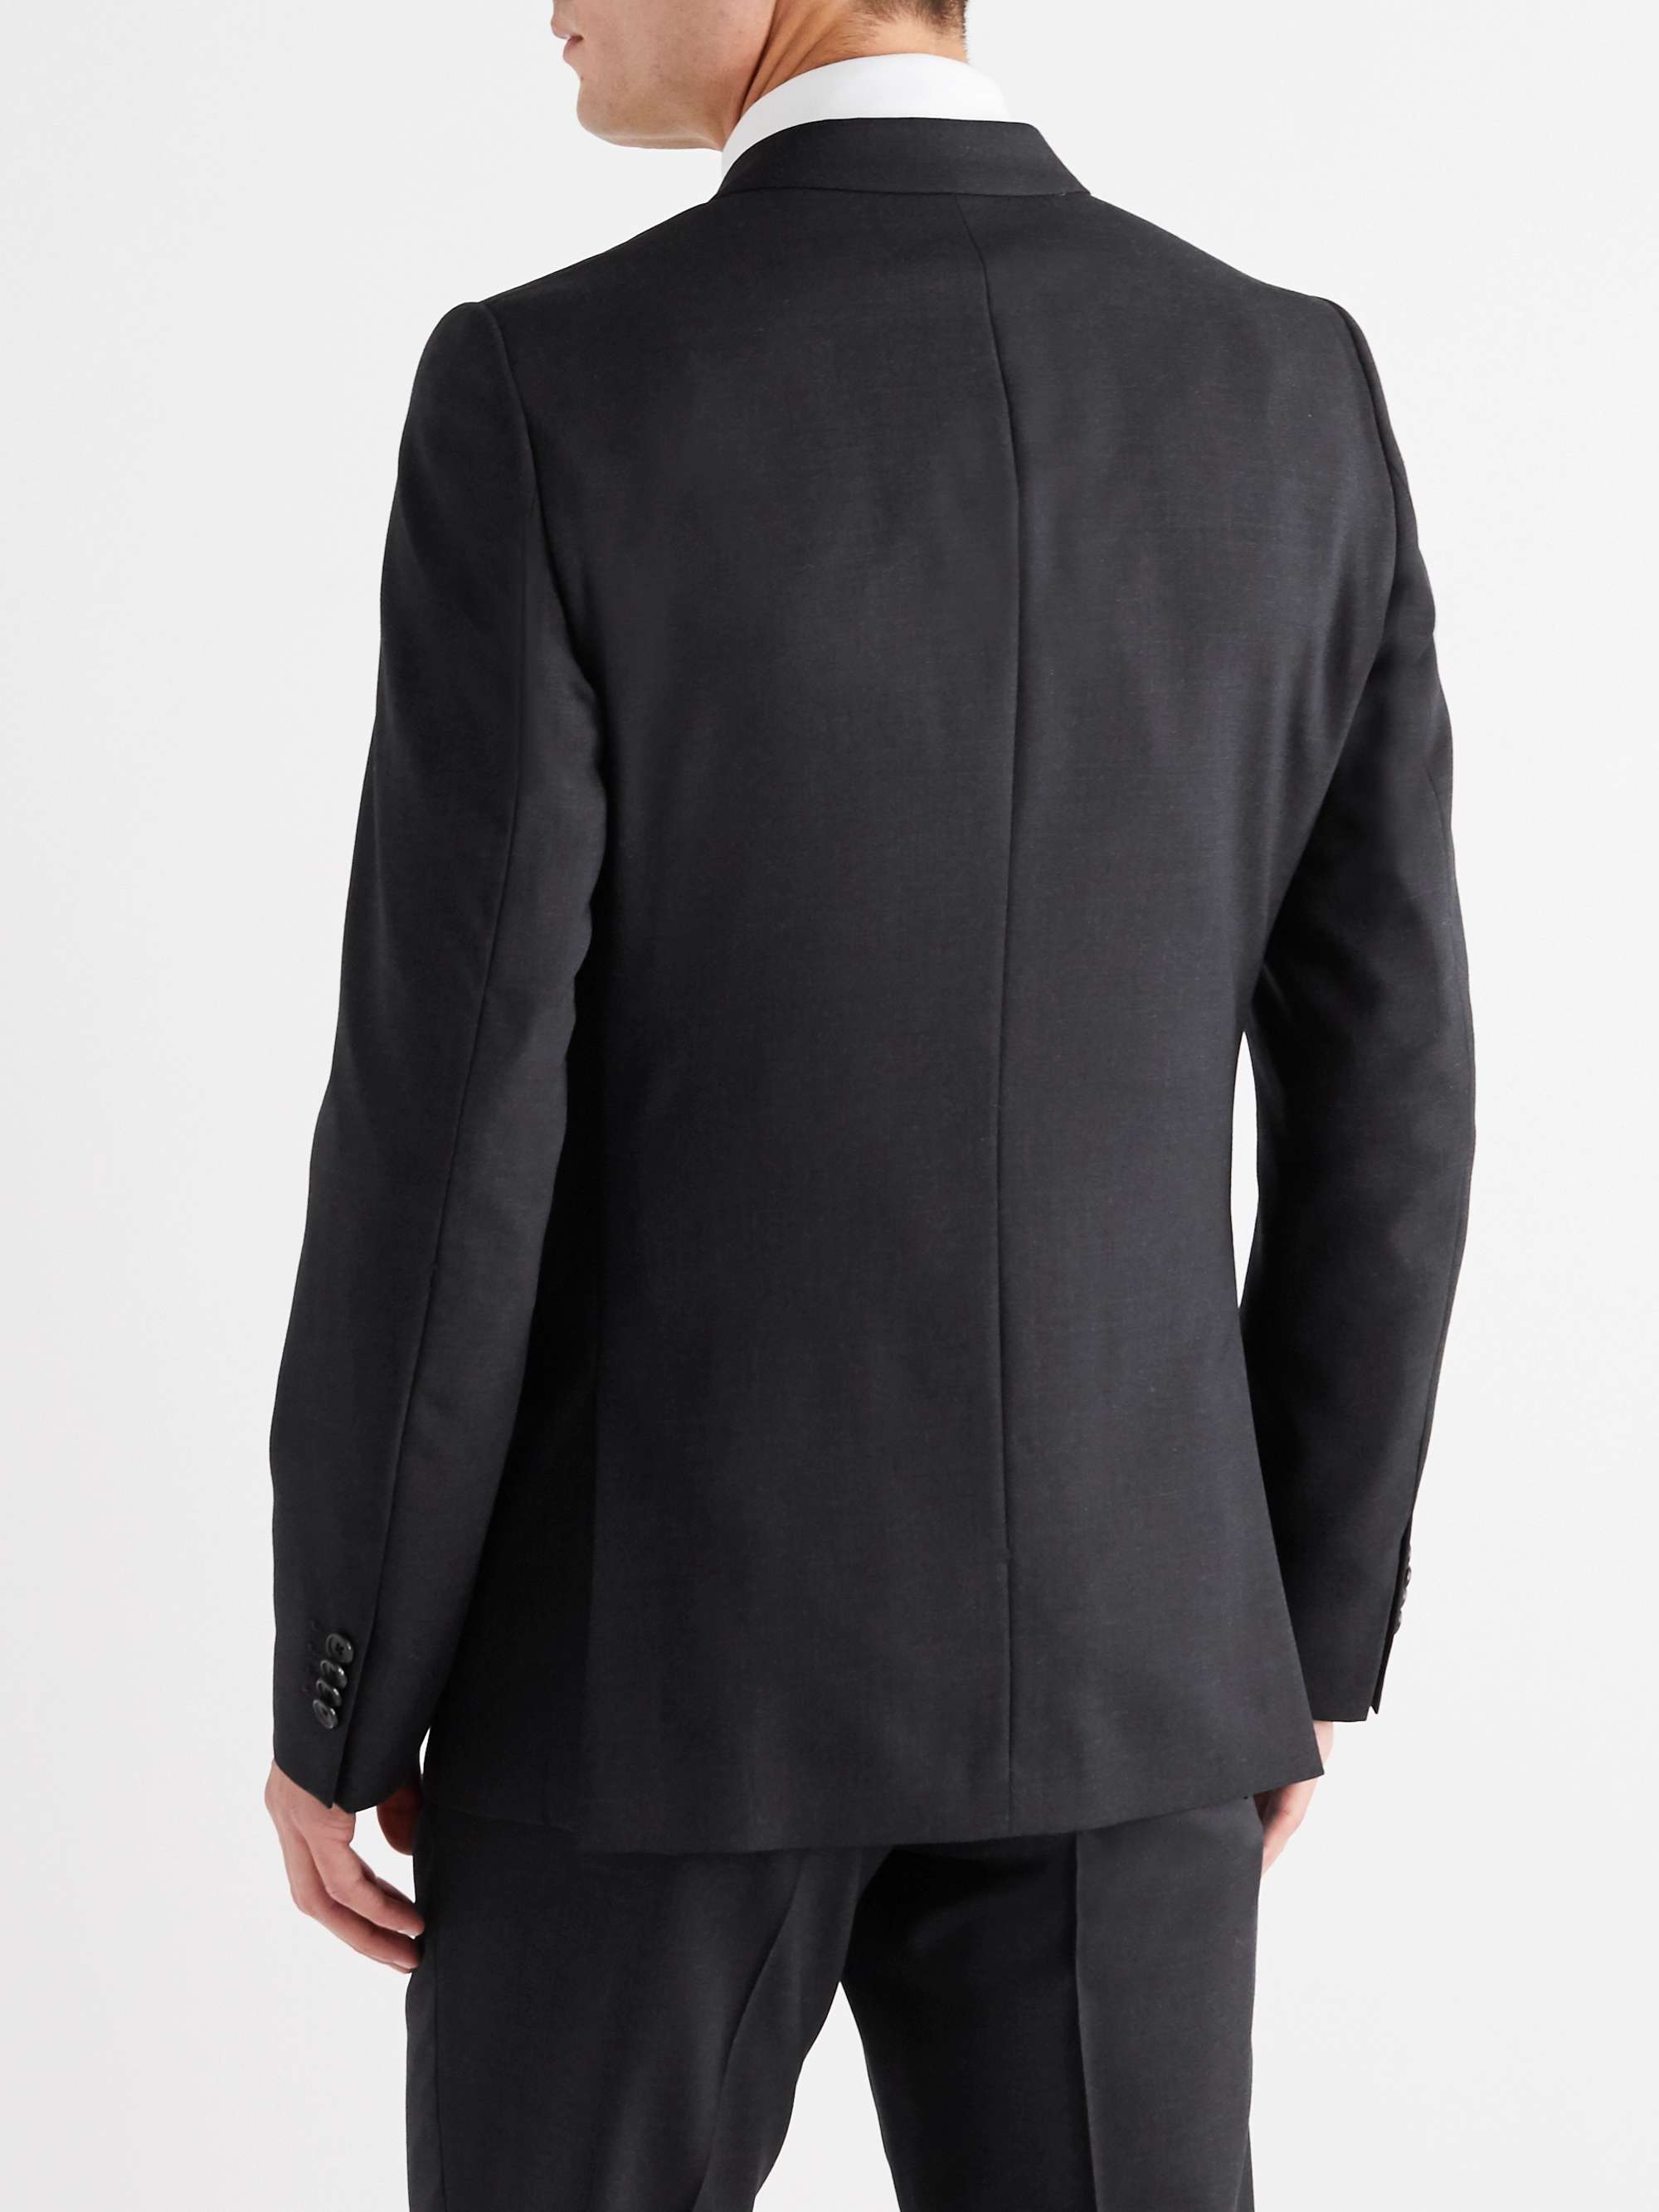 PAUL SMITH Soho Wool Suit Jacket for Men | MR PORTER